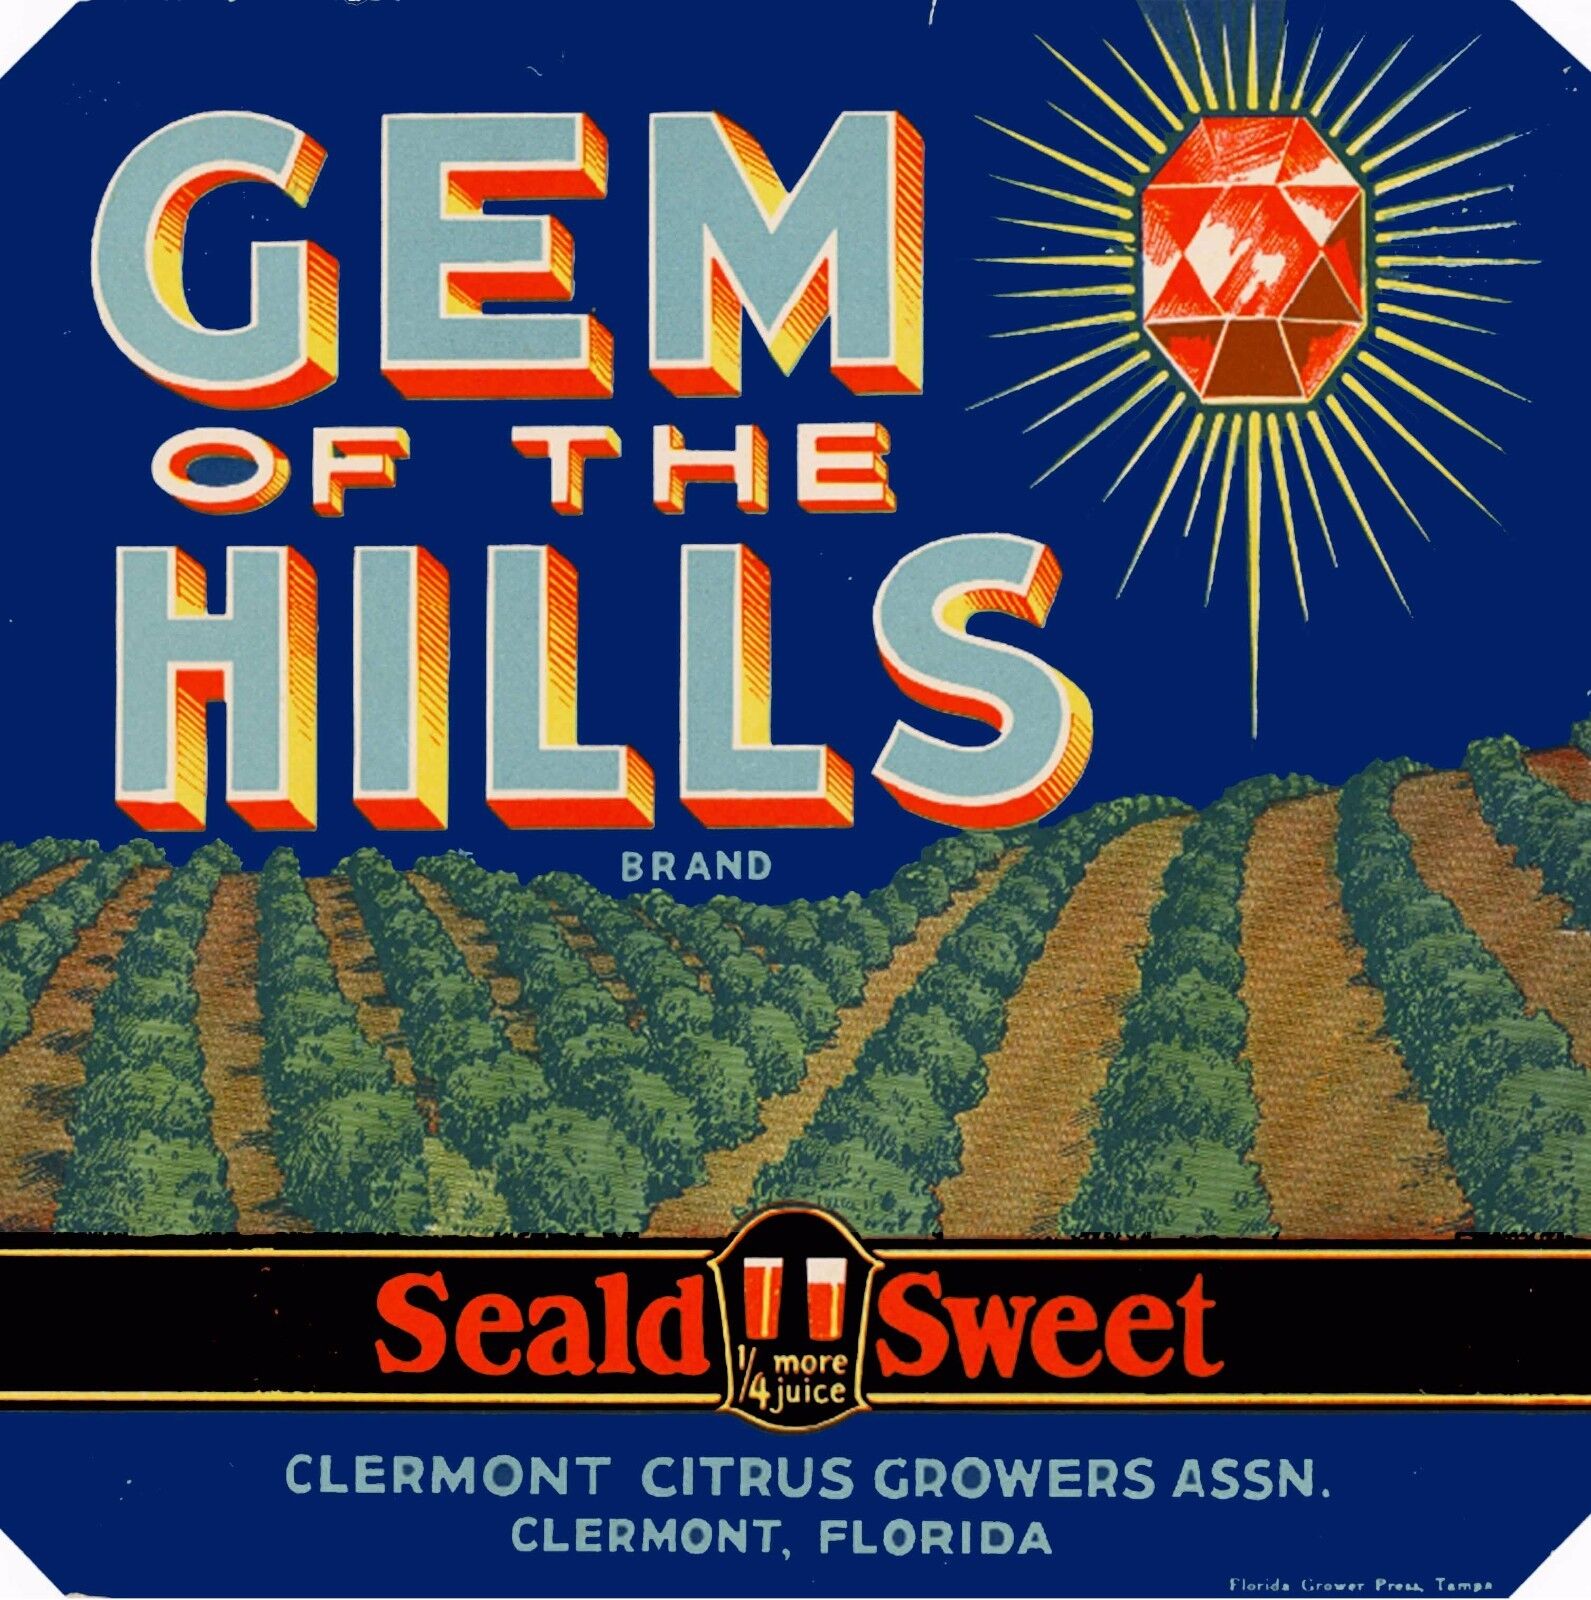 Clearwater Florida Gem of the Hills 2 Orange Citrus Fruit Crate Label Art Print